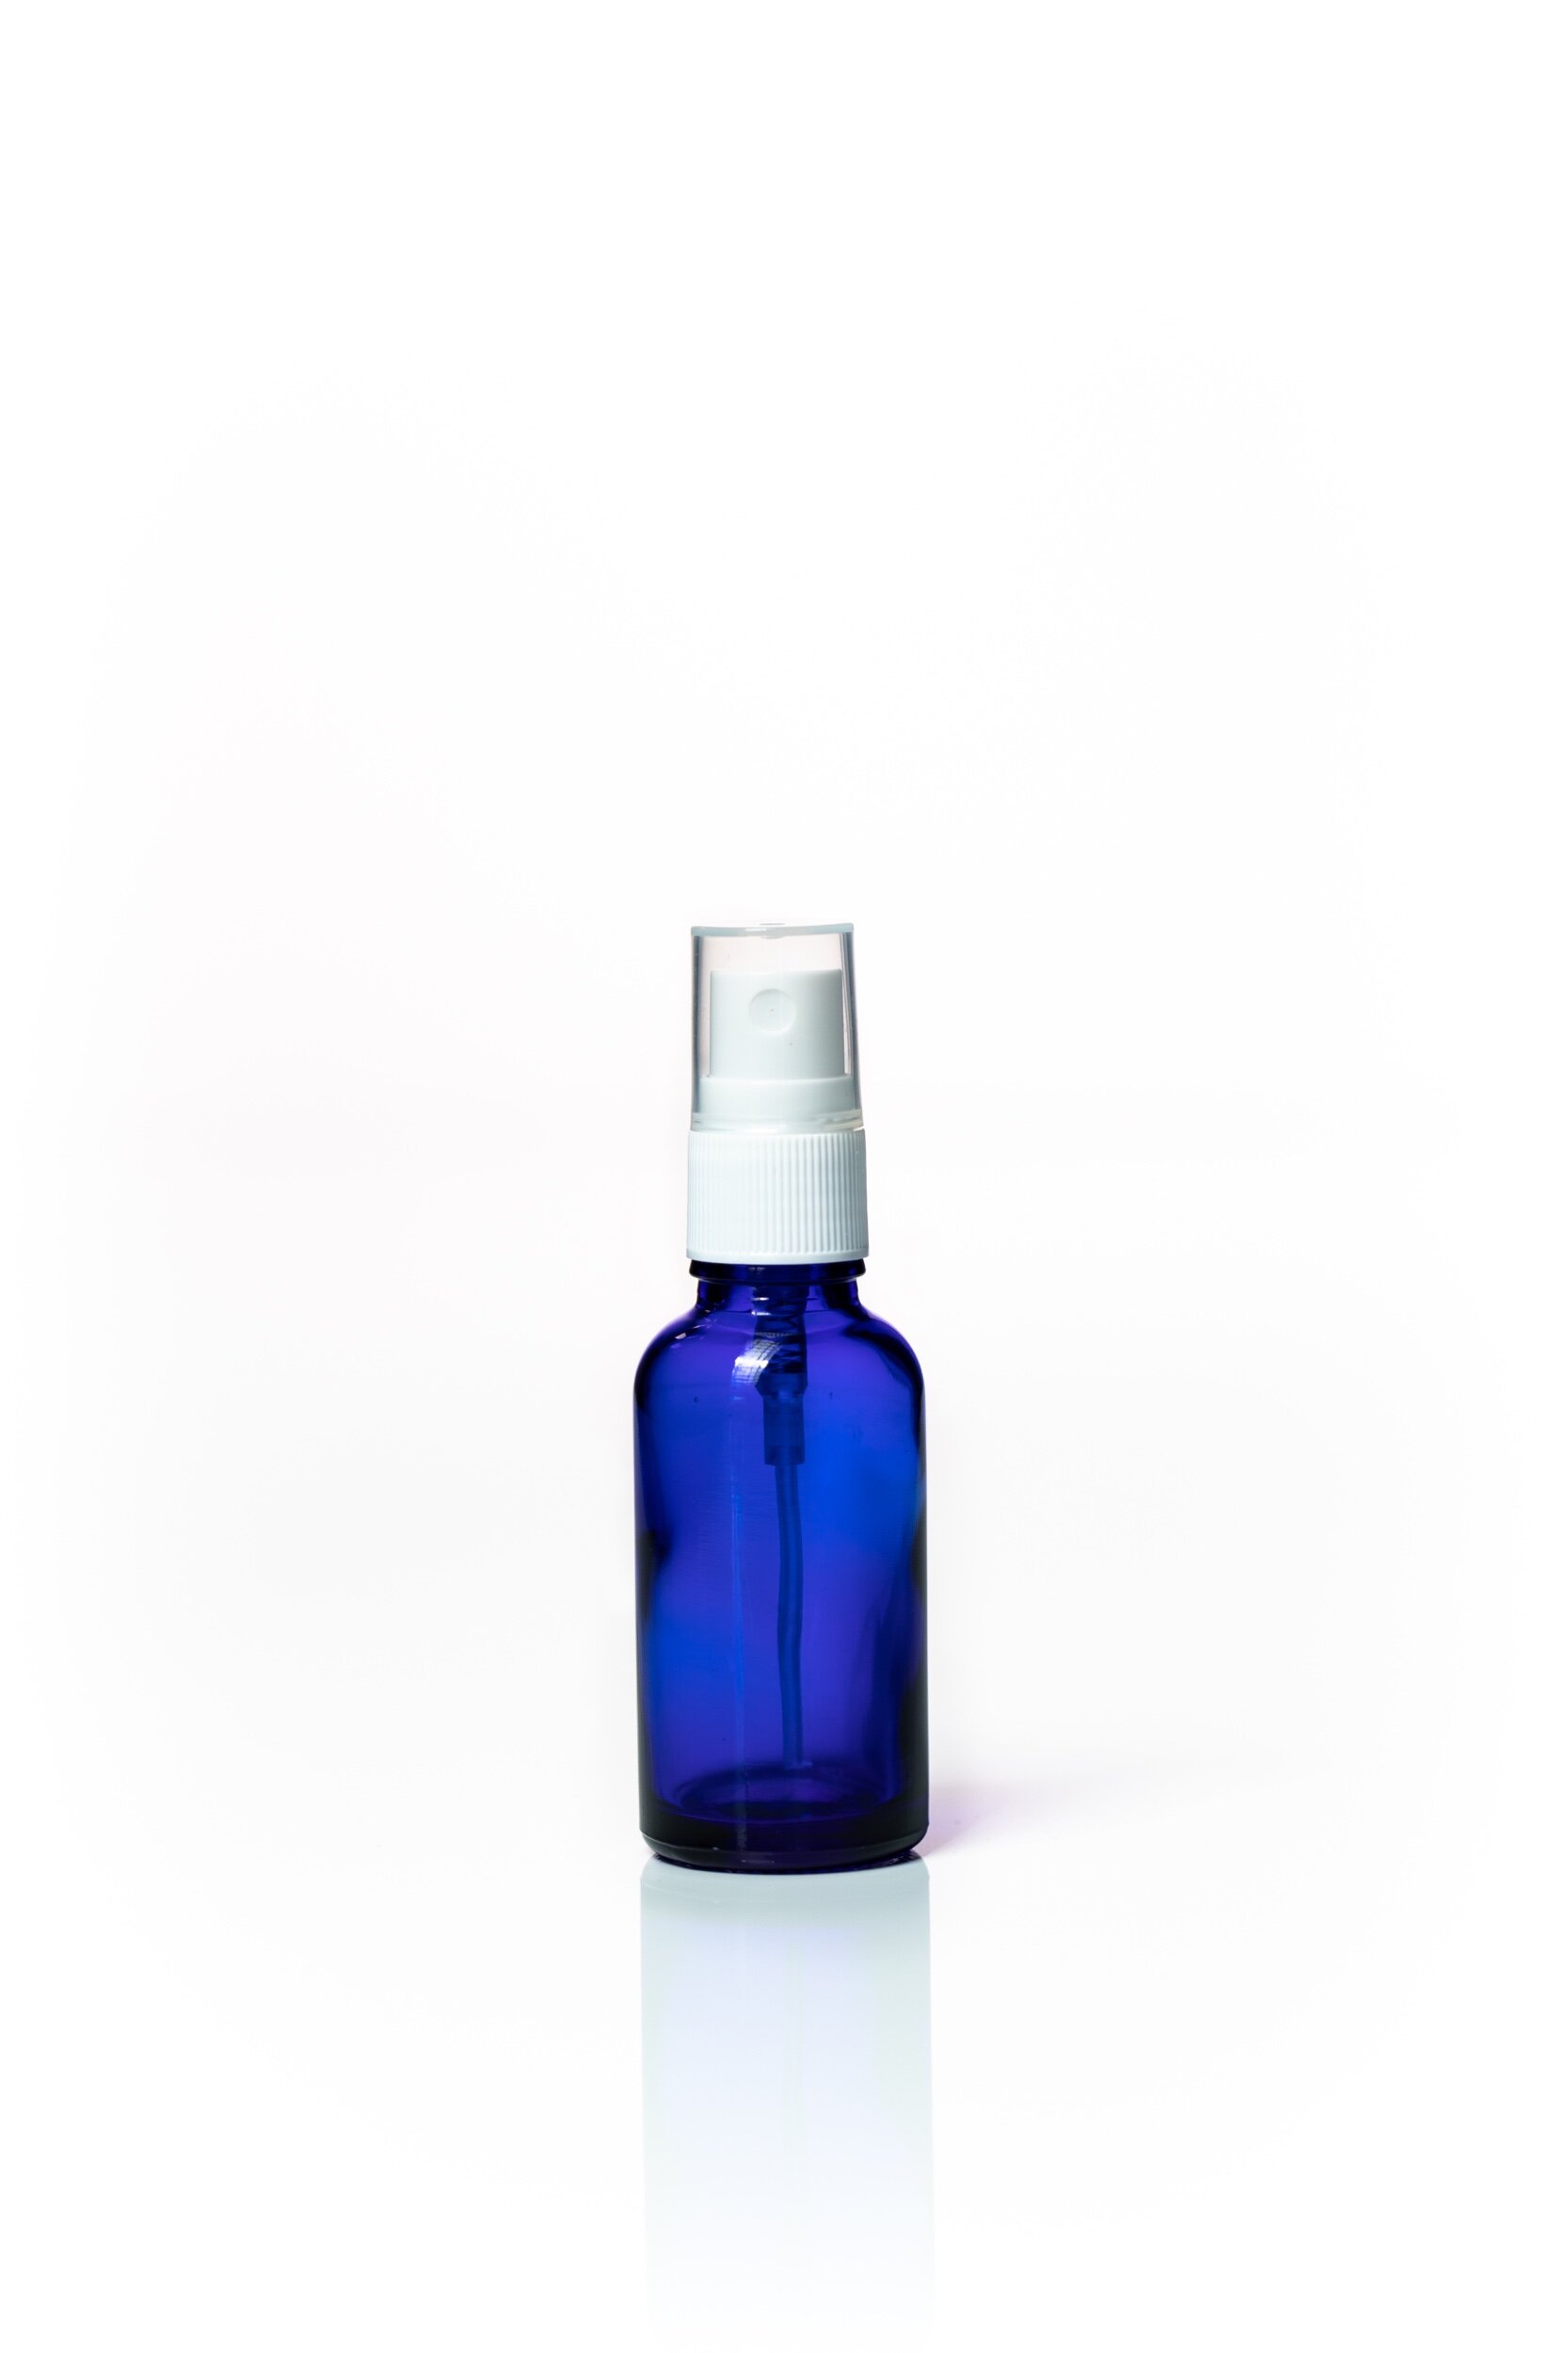 30ml Blue Glass Mist Spray Bottle - White Lid 4480 x 6720.jpeg